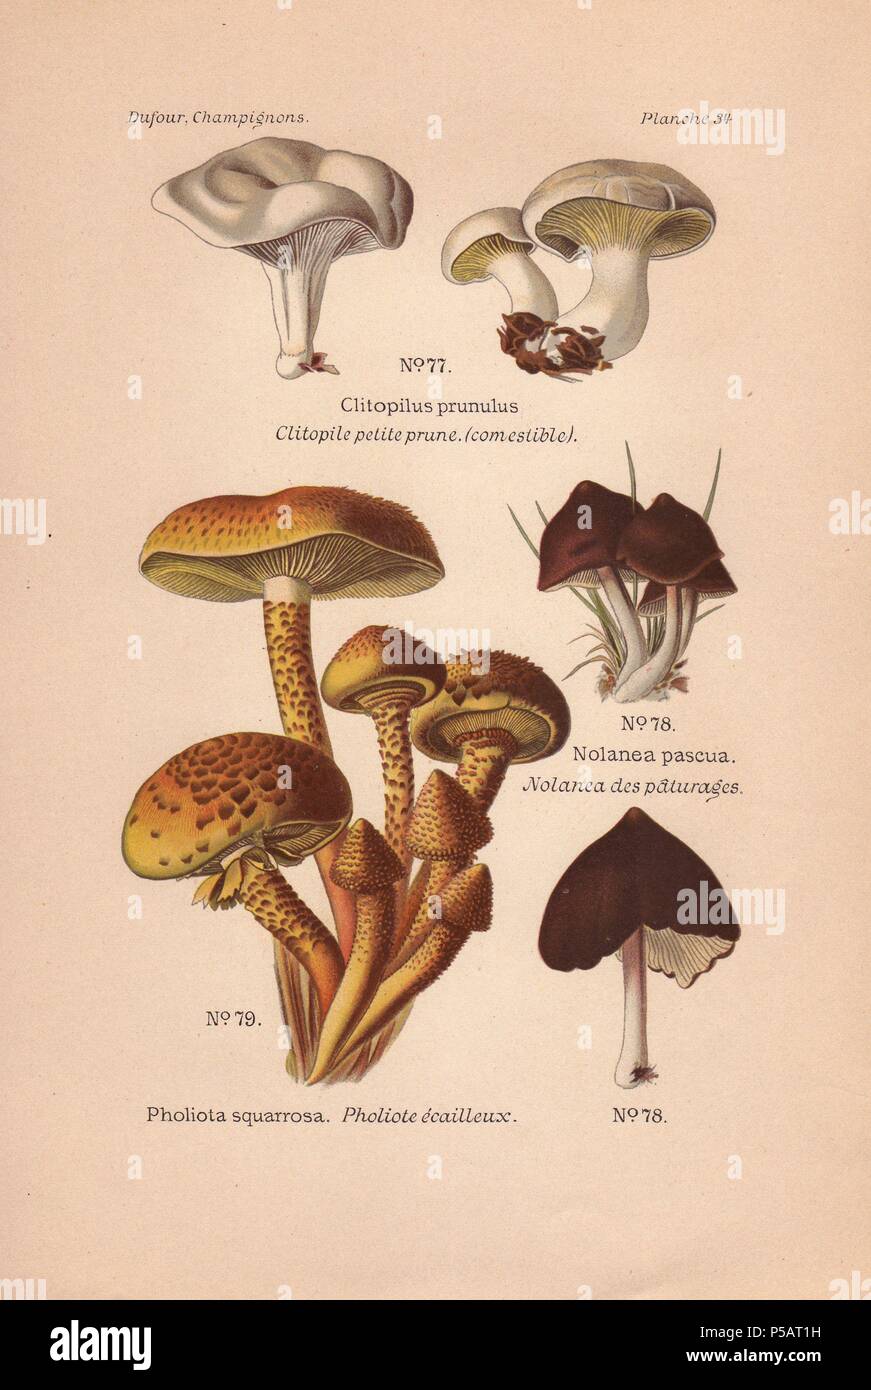 Edible sweetbread mushroom Clitopilus prunulus, shaggy Pholiota squarrosa, and chocolate-coloured Nolanea pascua mushrooms.. . Chromolithograph from Leon Dufour's "Atlas des Champignons Comestibles et Veneneux" (1891). Stock Photo